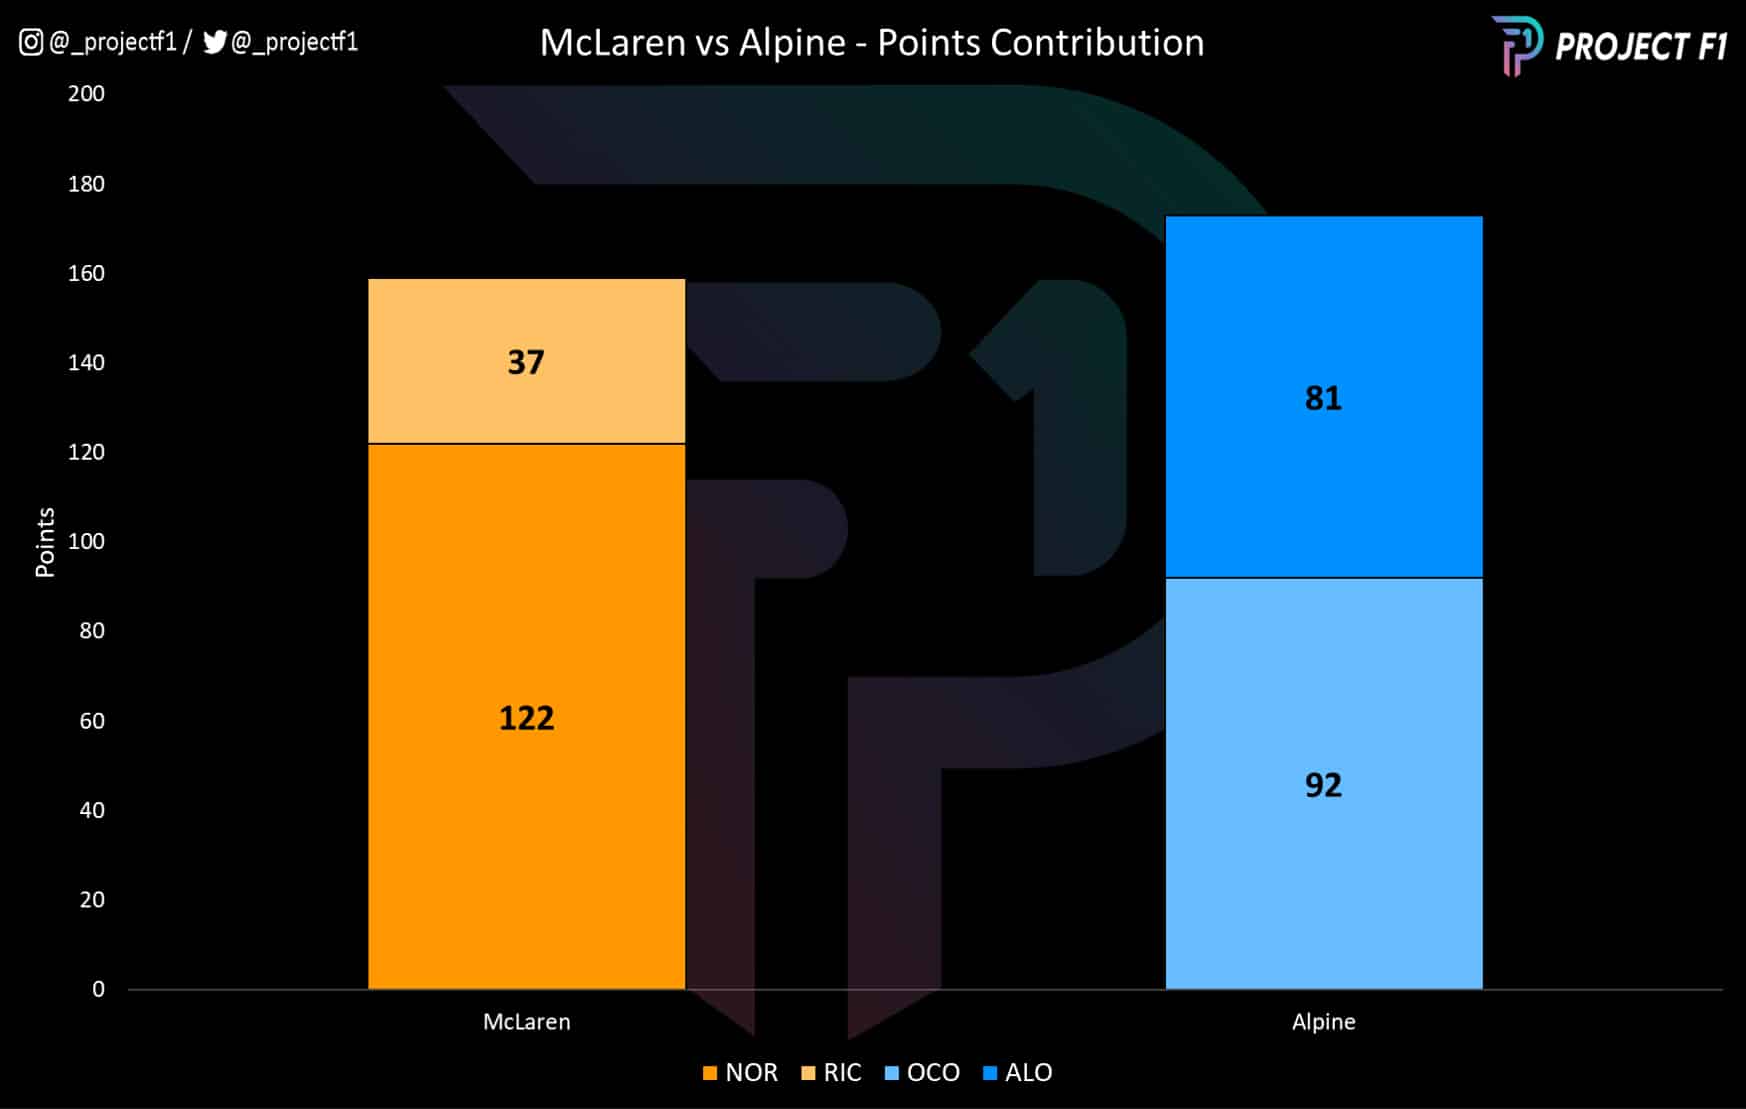 McLaren vs Alpine 2022 F1 points contribution by driver